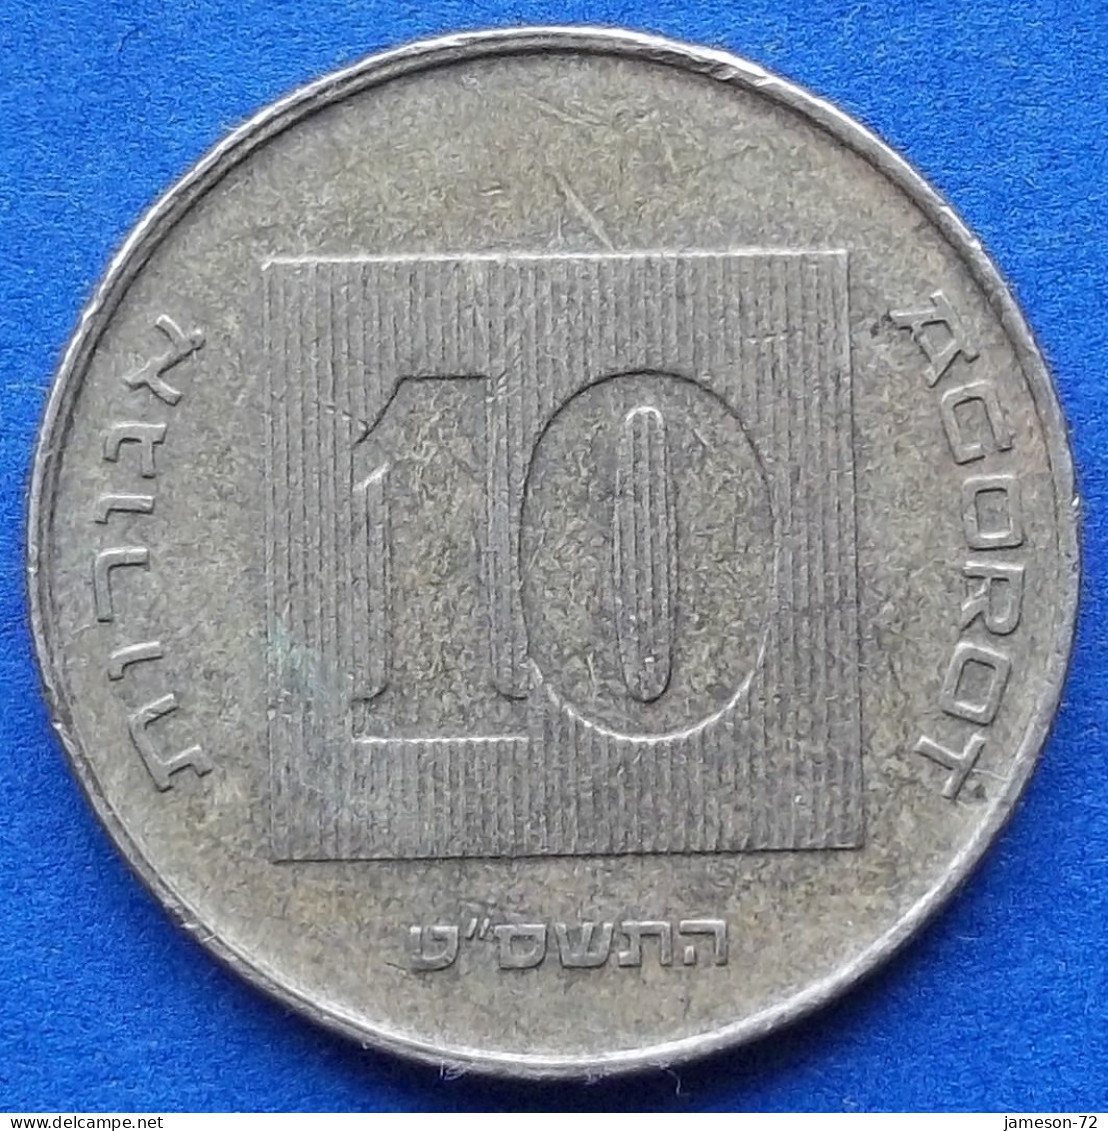 ISRAEL - 10 Agorot JE 5769 (2009AD) "Menorah" KM# 158 Monetary Reform (1985) - Edelweiss Coins - Israël